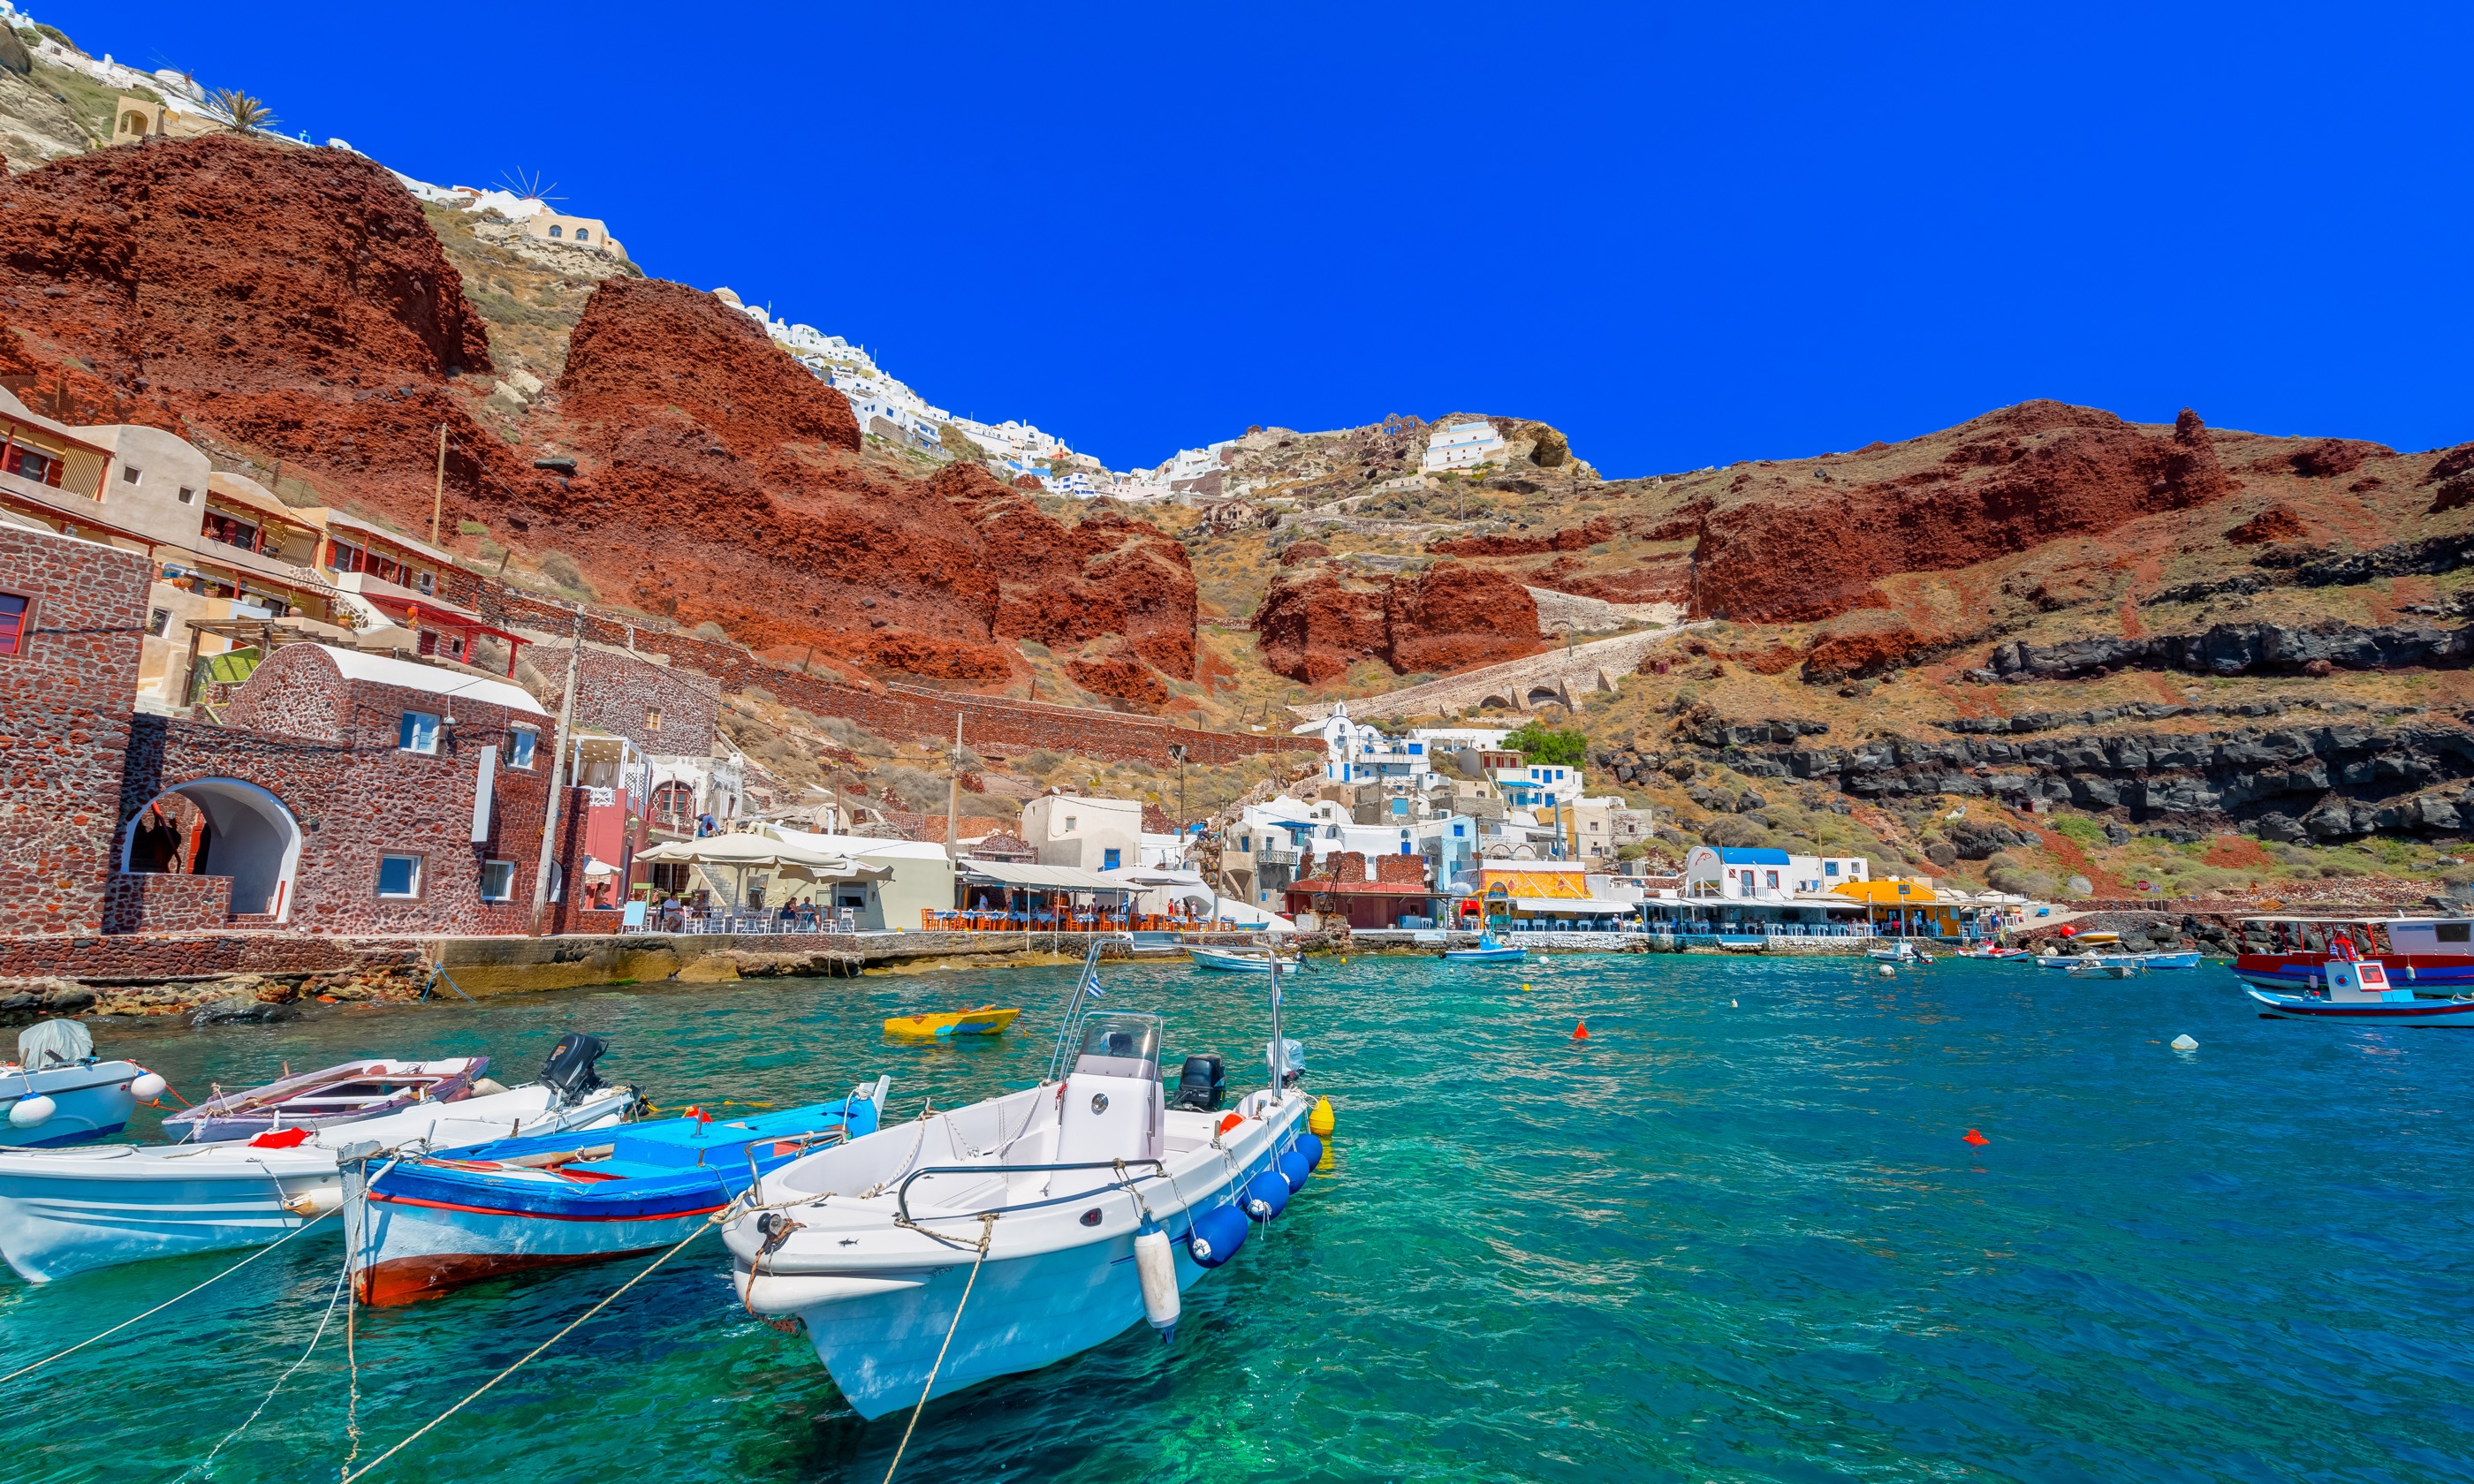 Ammoudi village, Santorini, with fishing boats (Shutterstock.com)